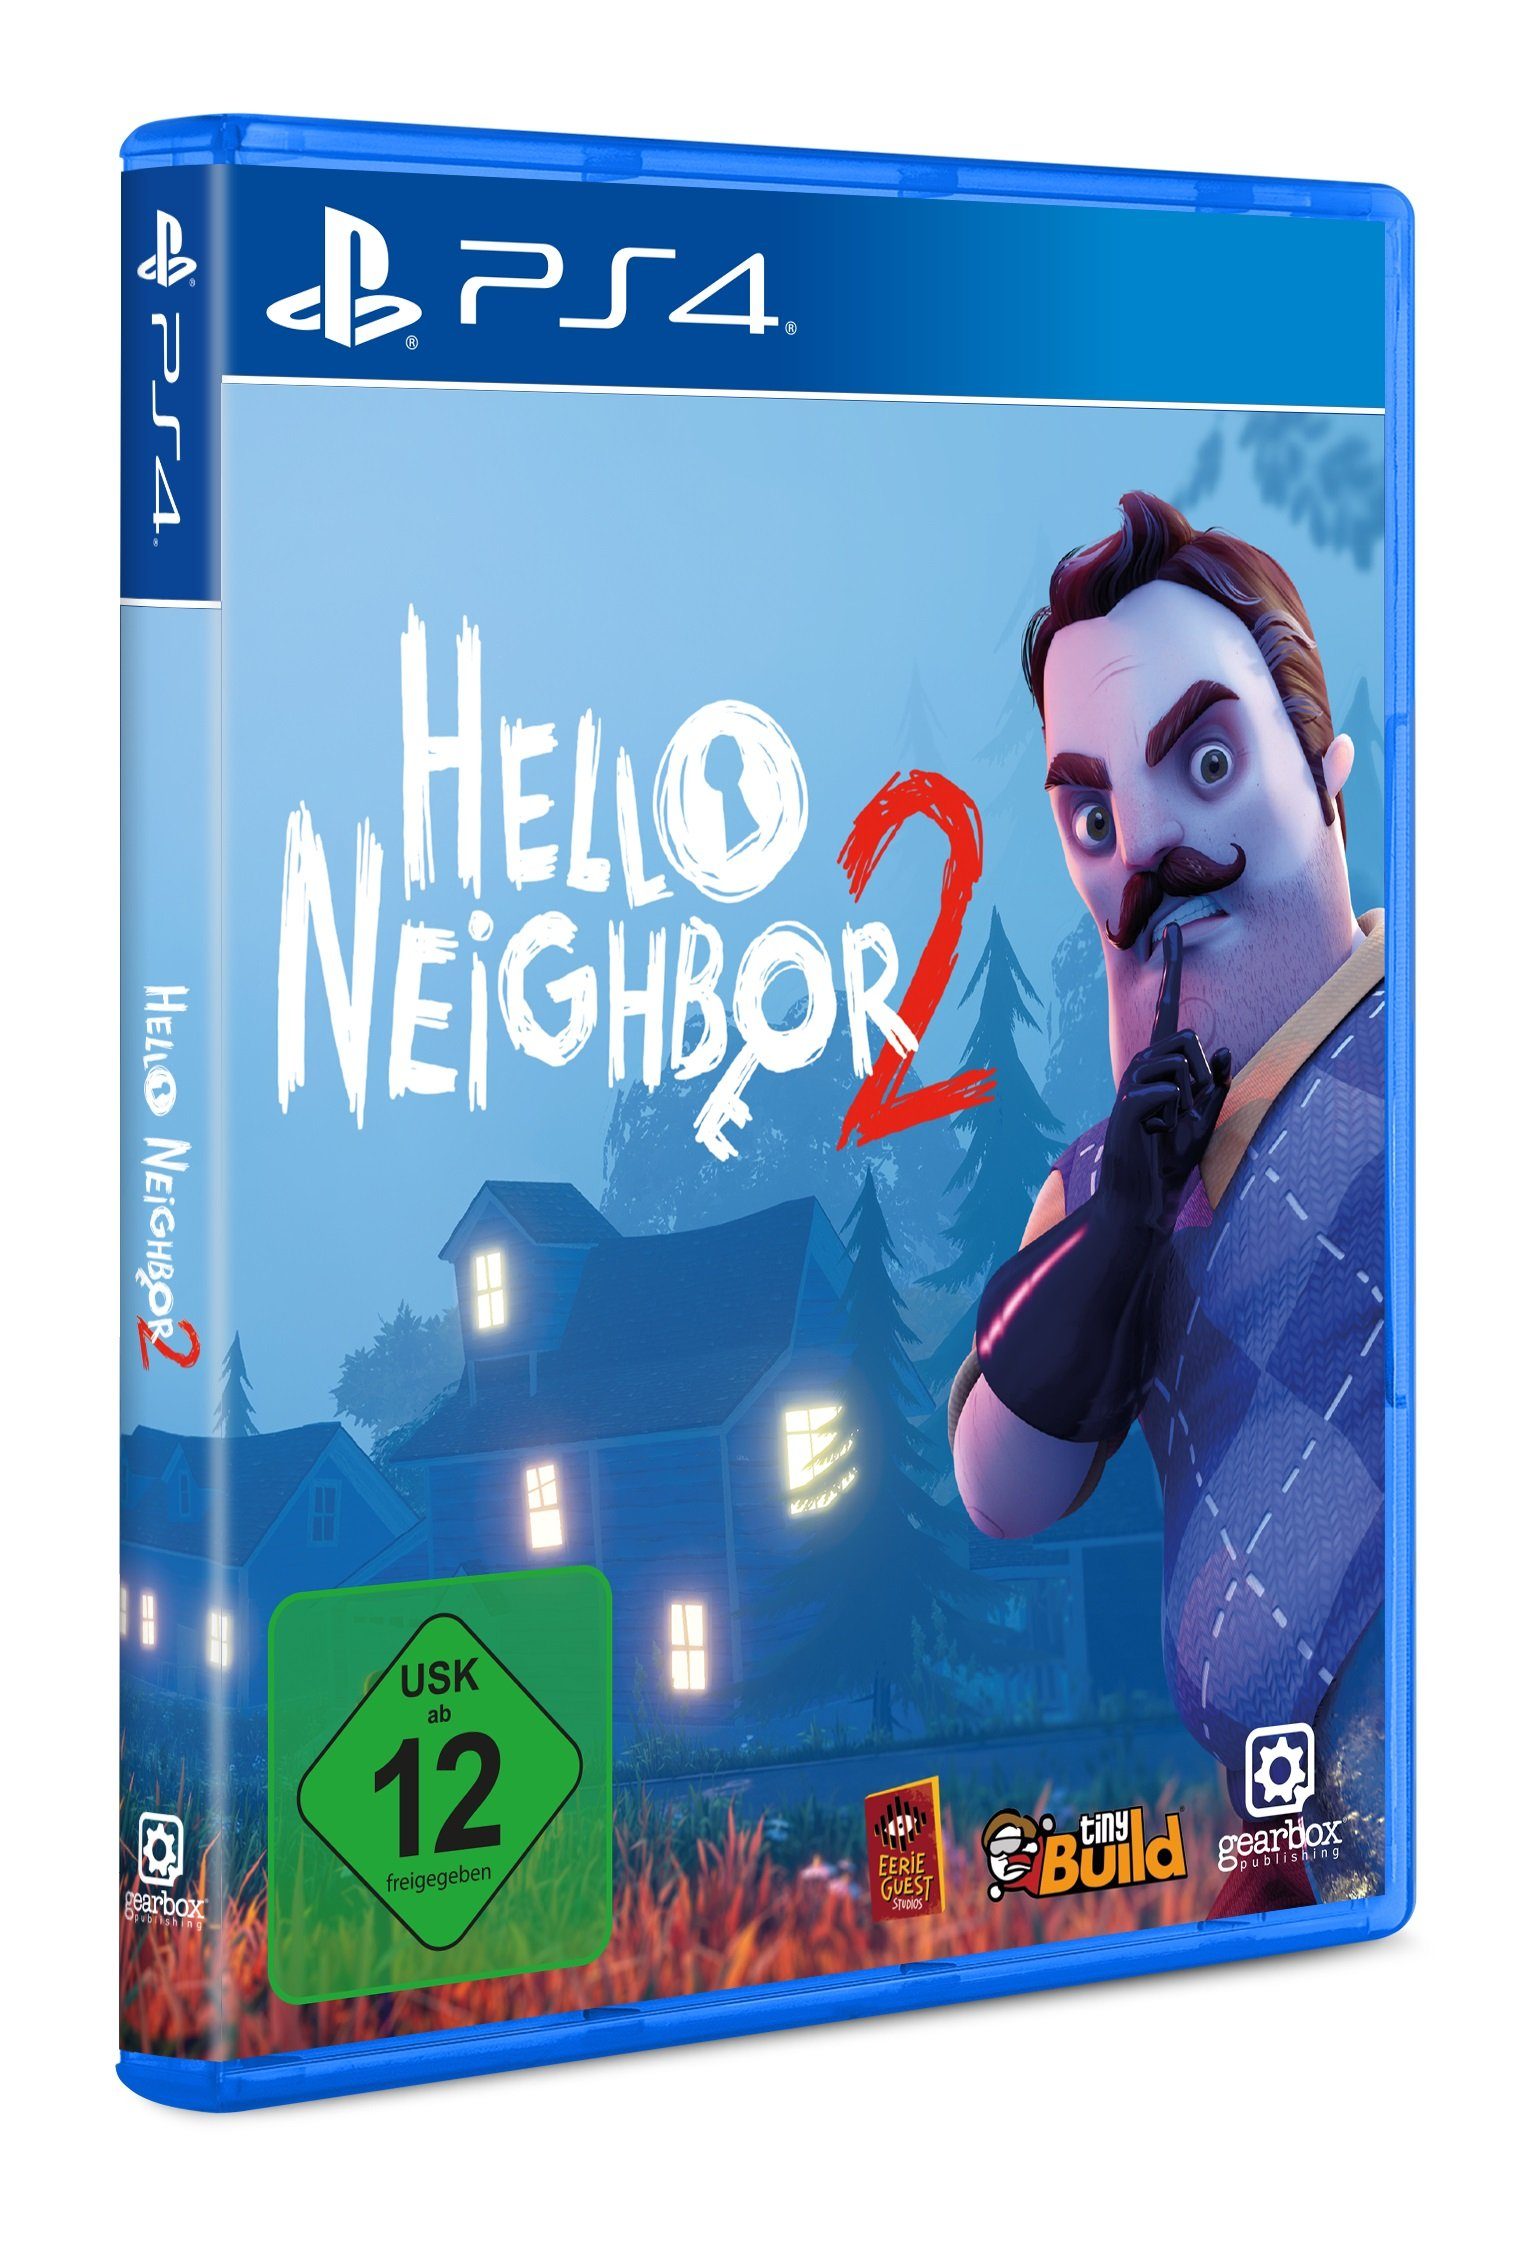 2 PlayStation Neighbor 4 Gearbox Publishing Hello